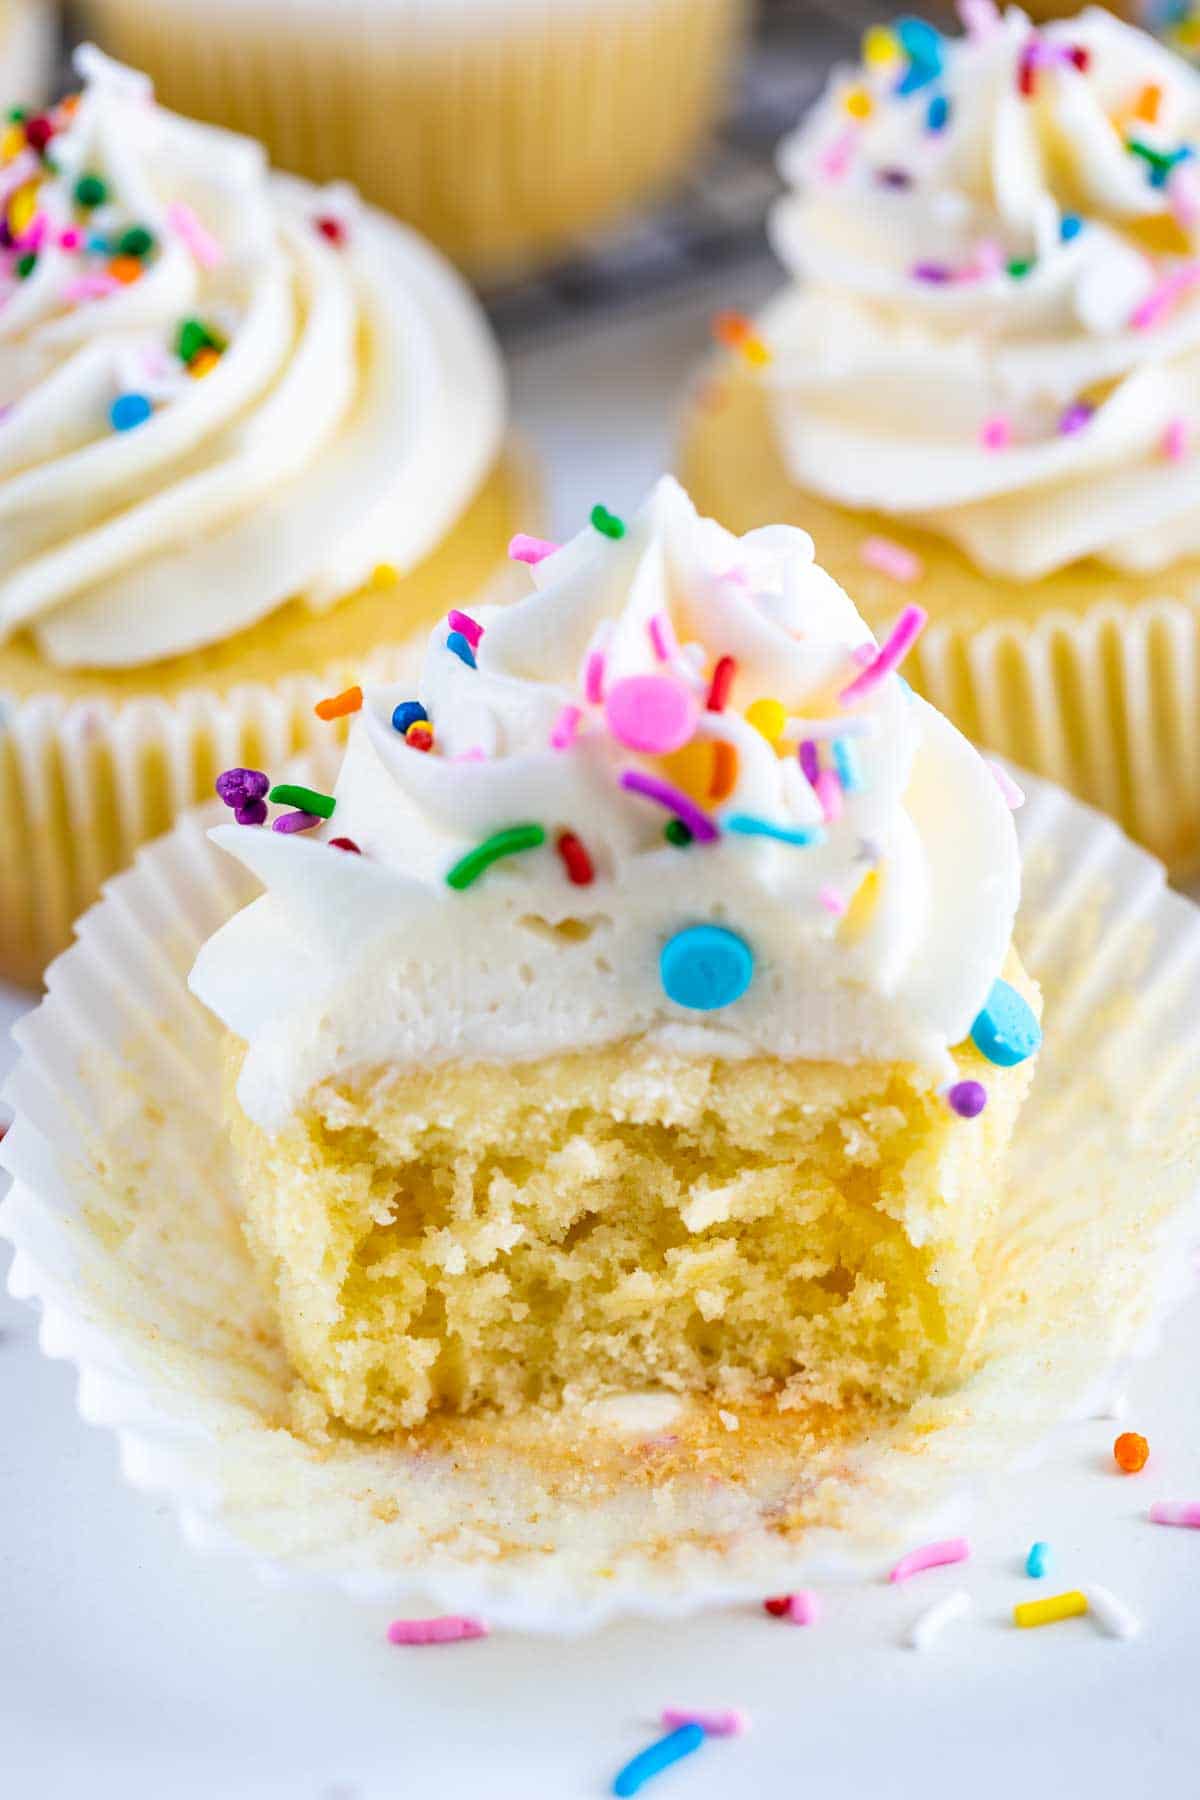 Perfect vanilla cupcake with vanilla buttercream cut in half to show fluffy inside